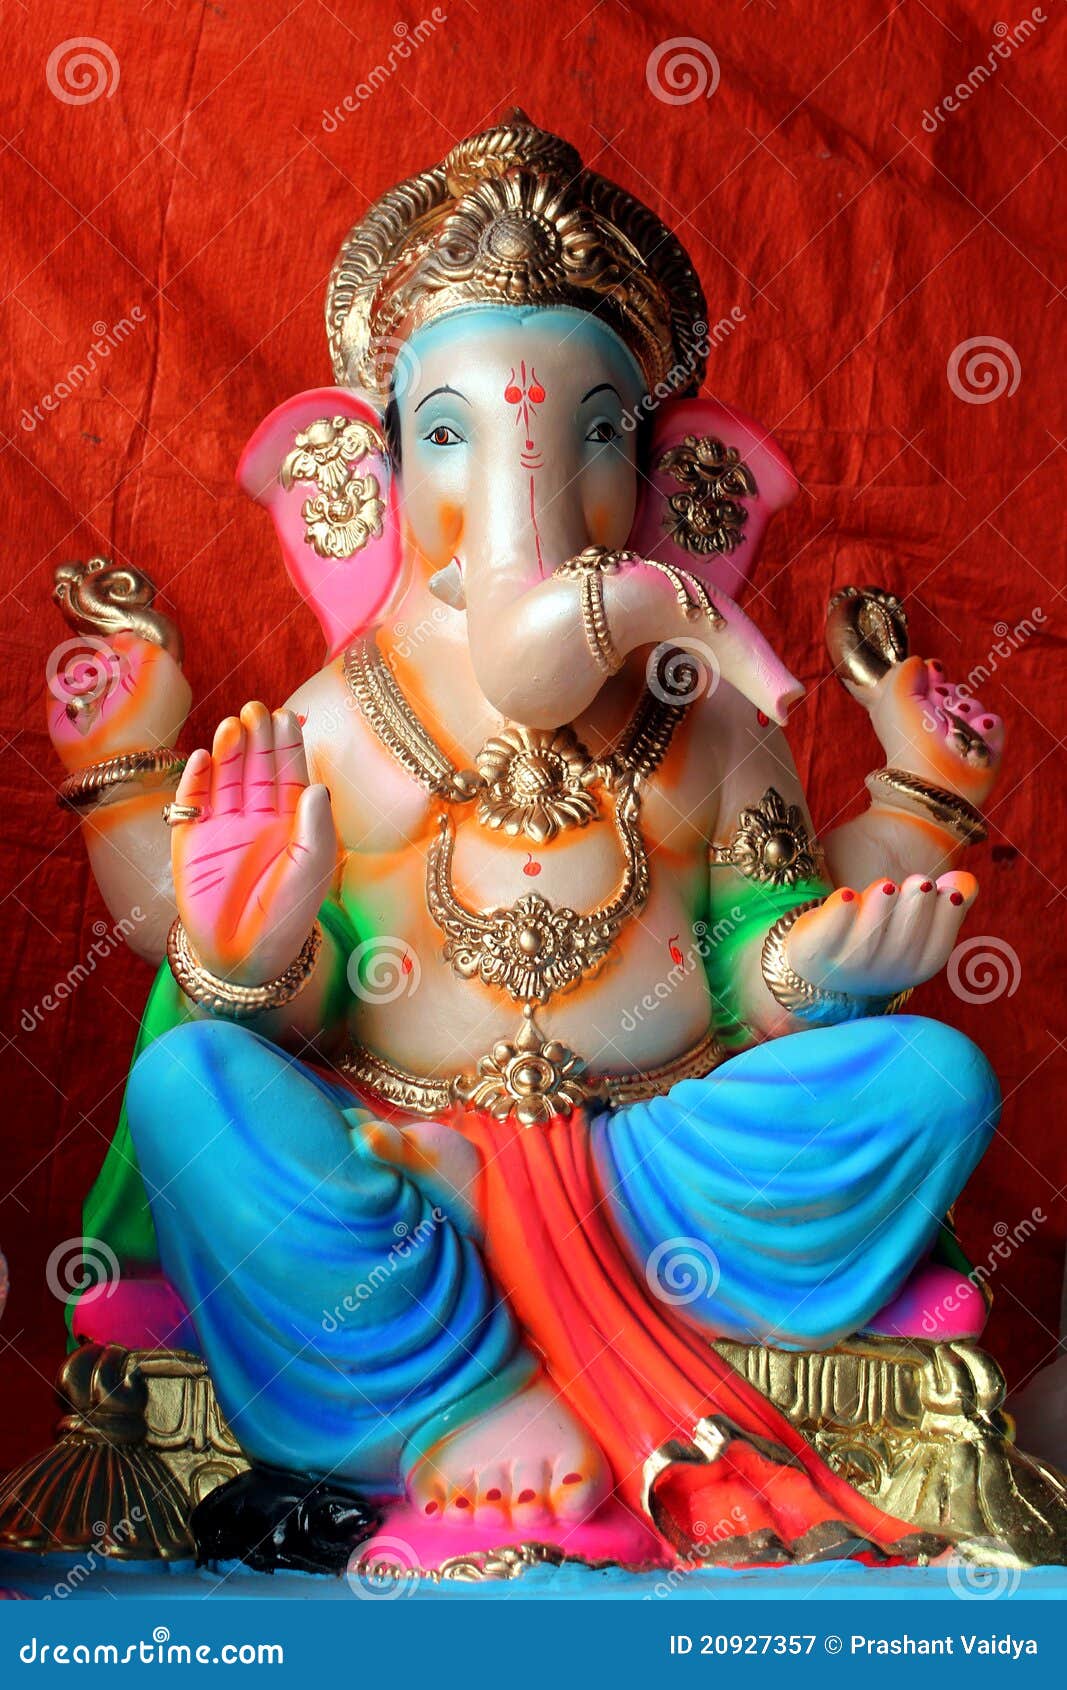 Lord Ganesha - stock image. Image of ganpati, dancing - 20927357